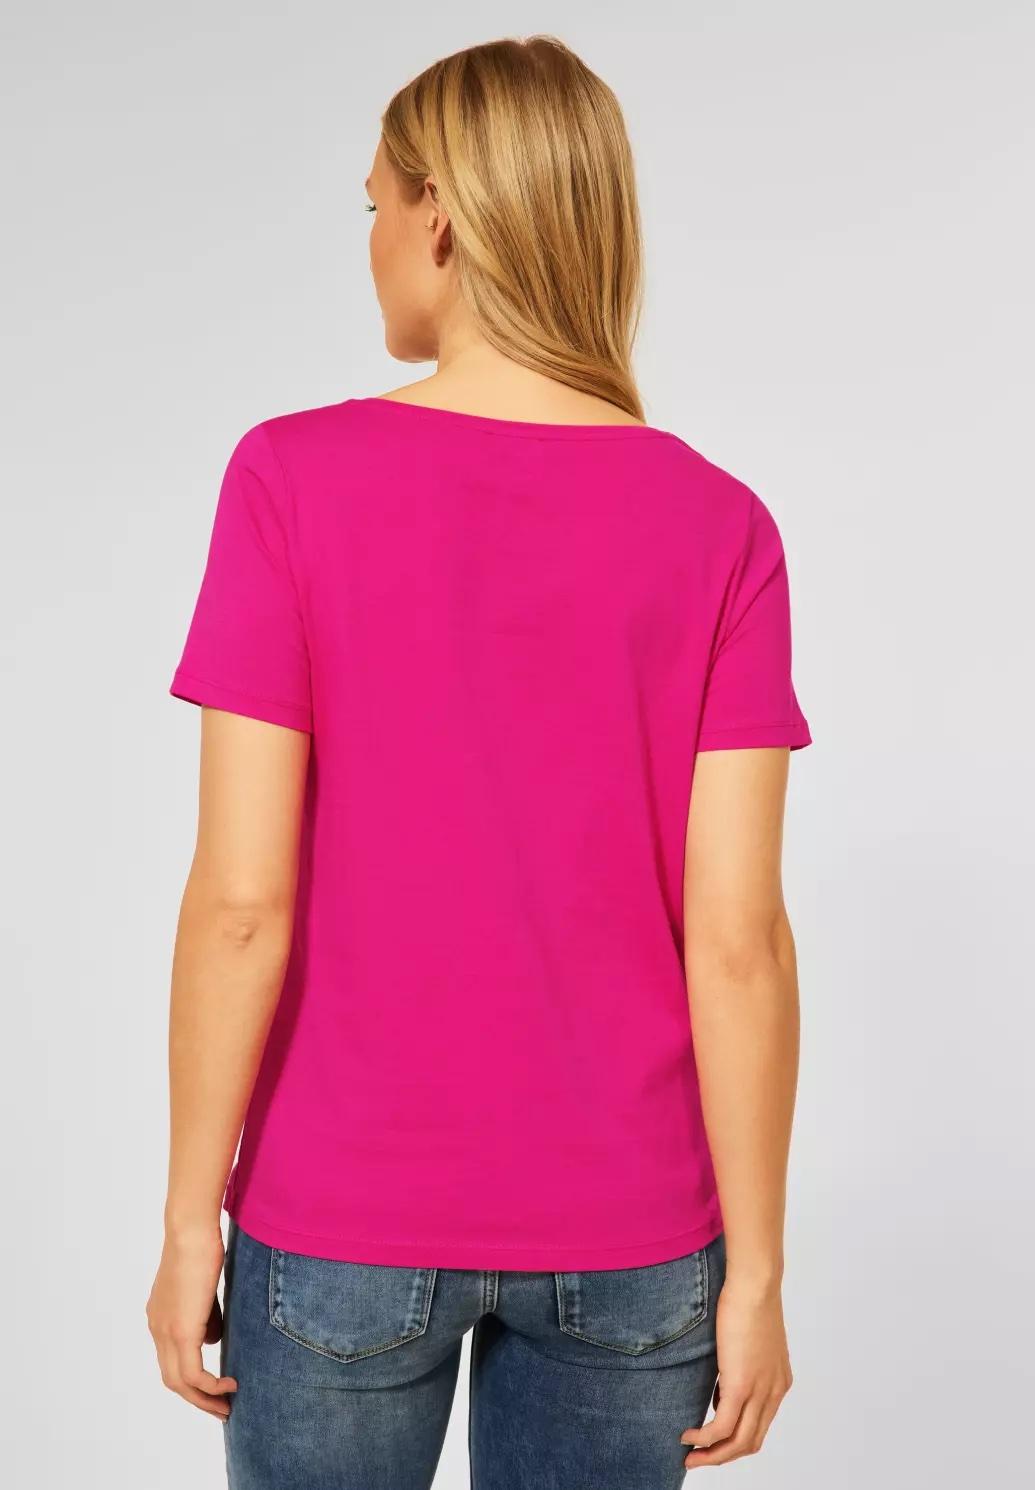 Street One tričko s fóliovou potlačou, bautiful, pink